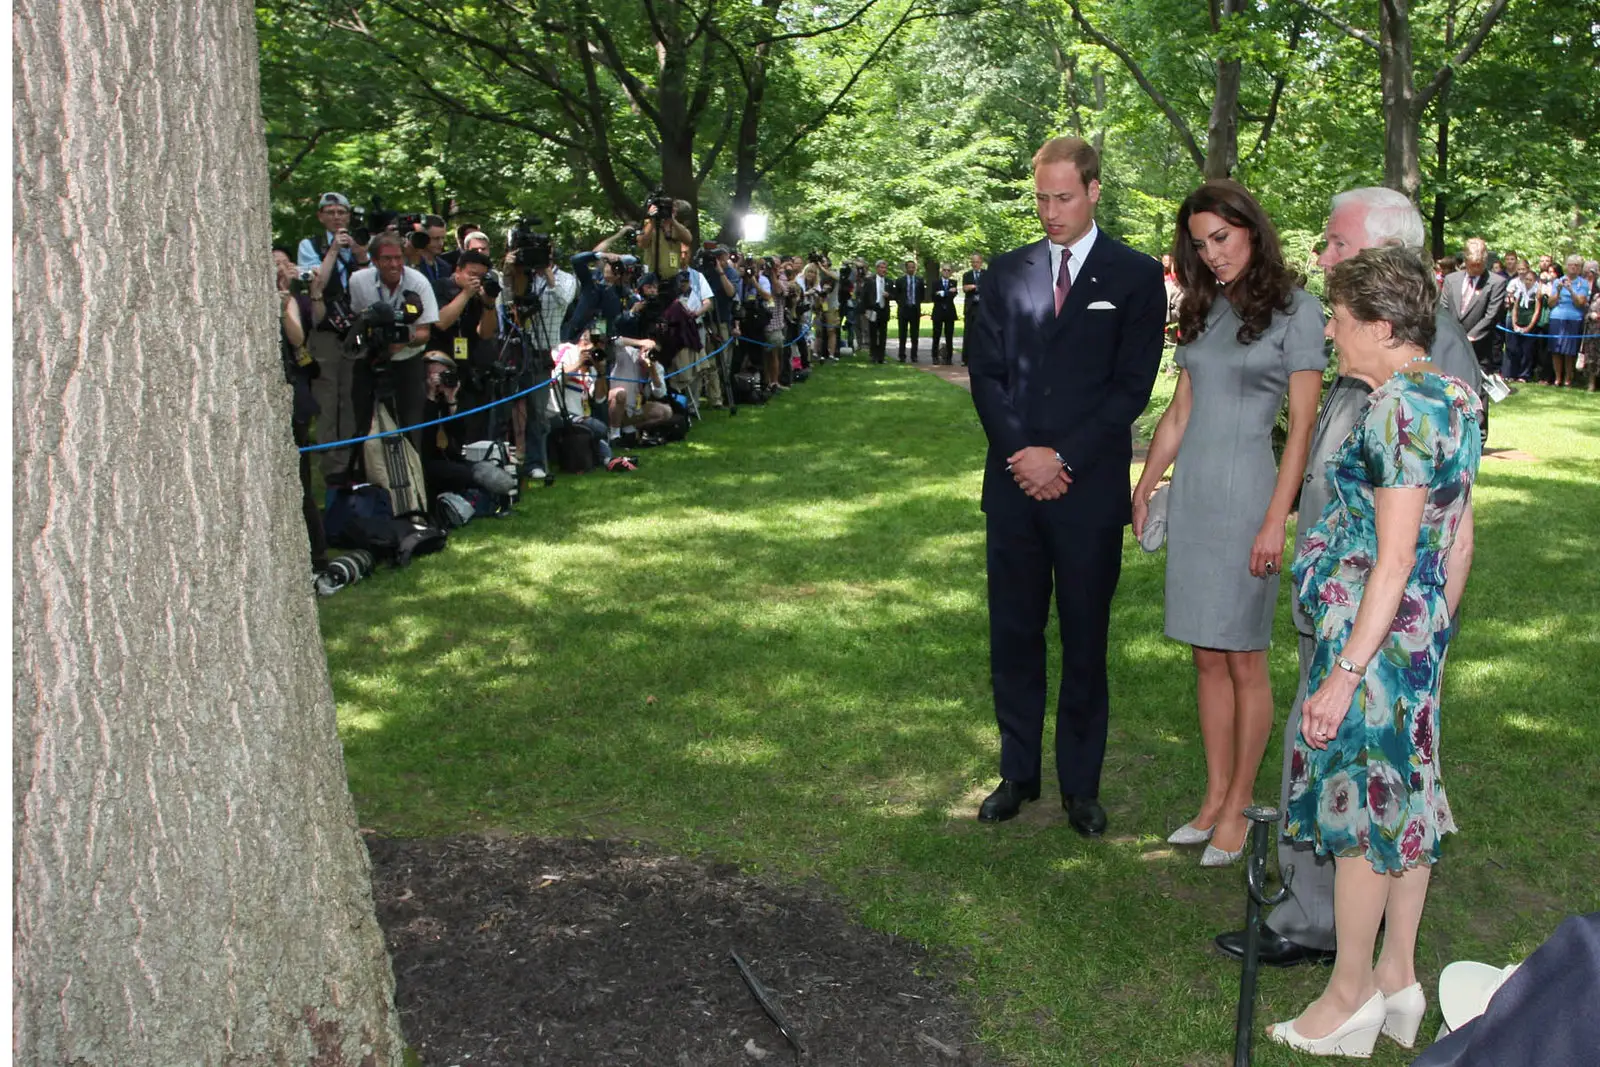 The Duke and Duchess of Cambridge saw Princess Diana pine oak tree at rideau hall